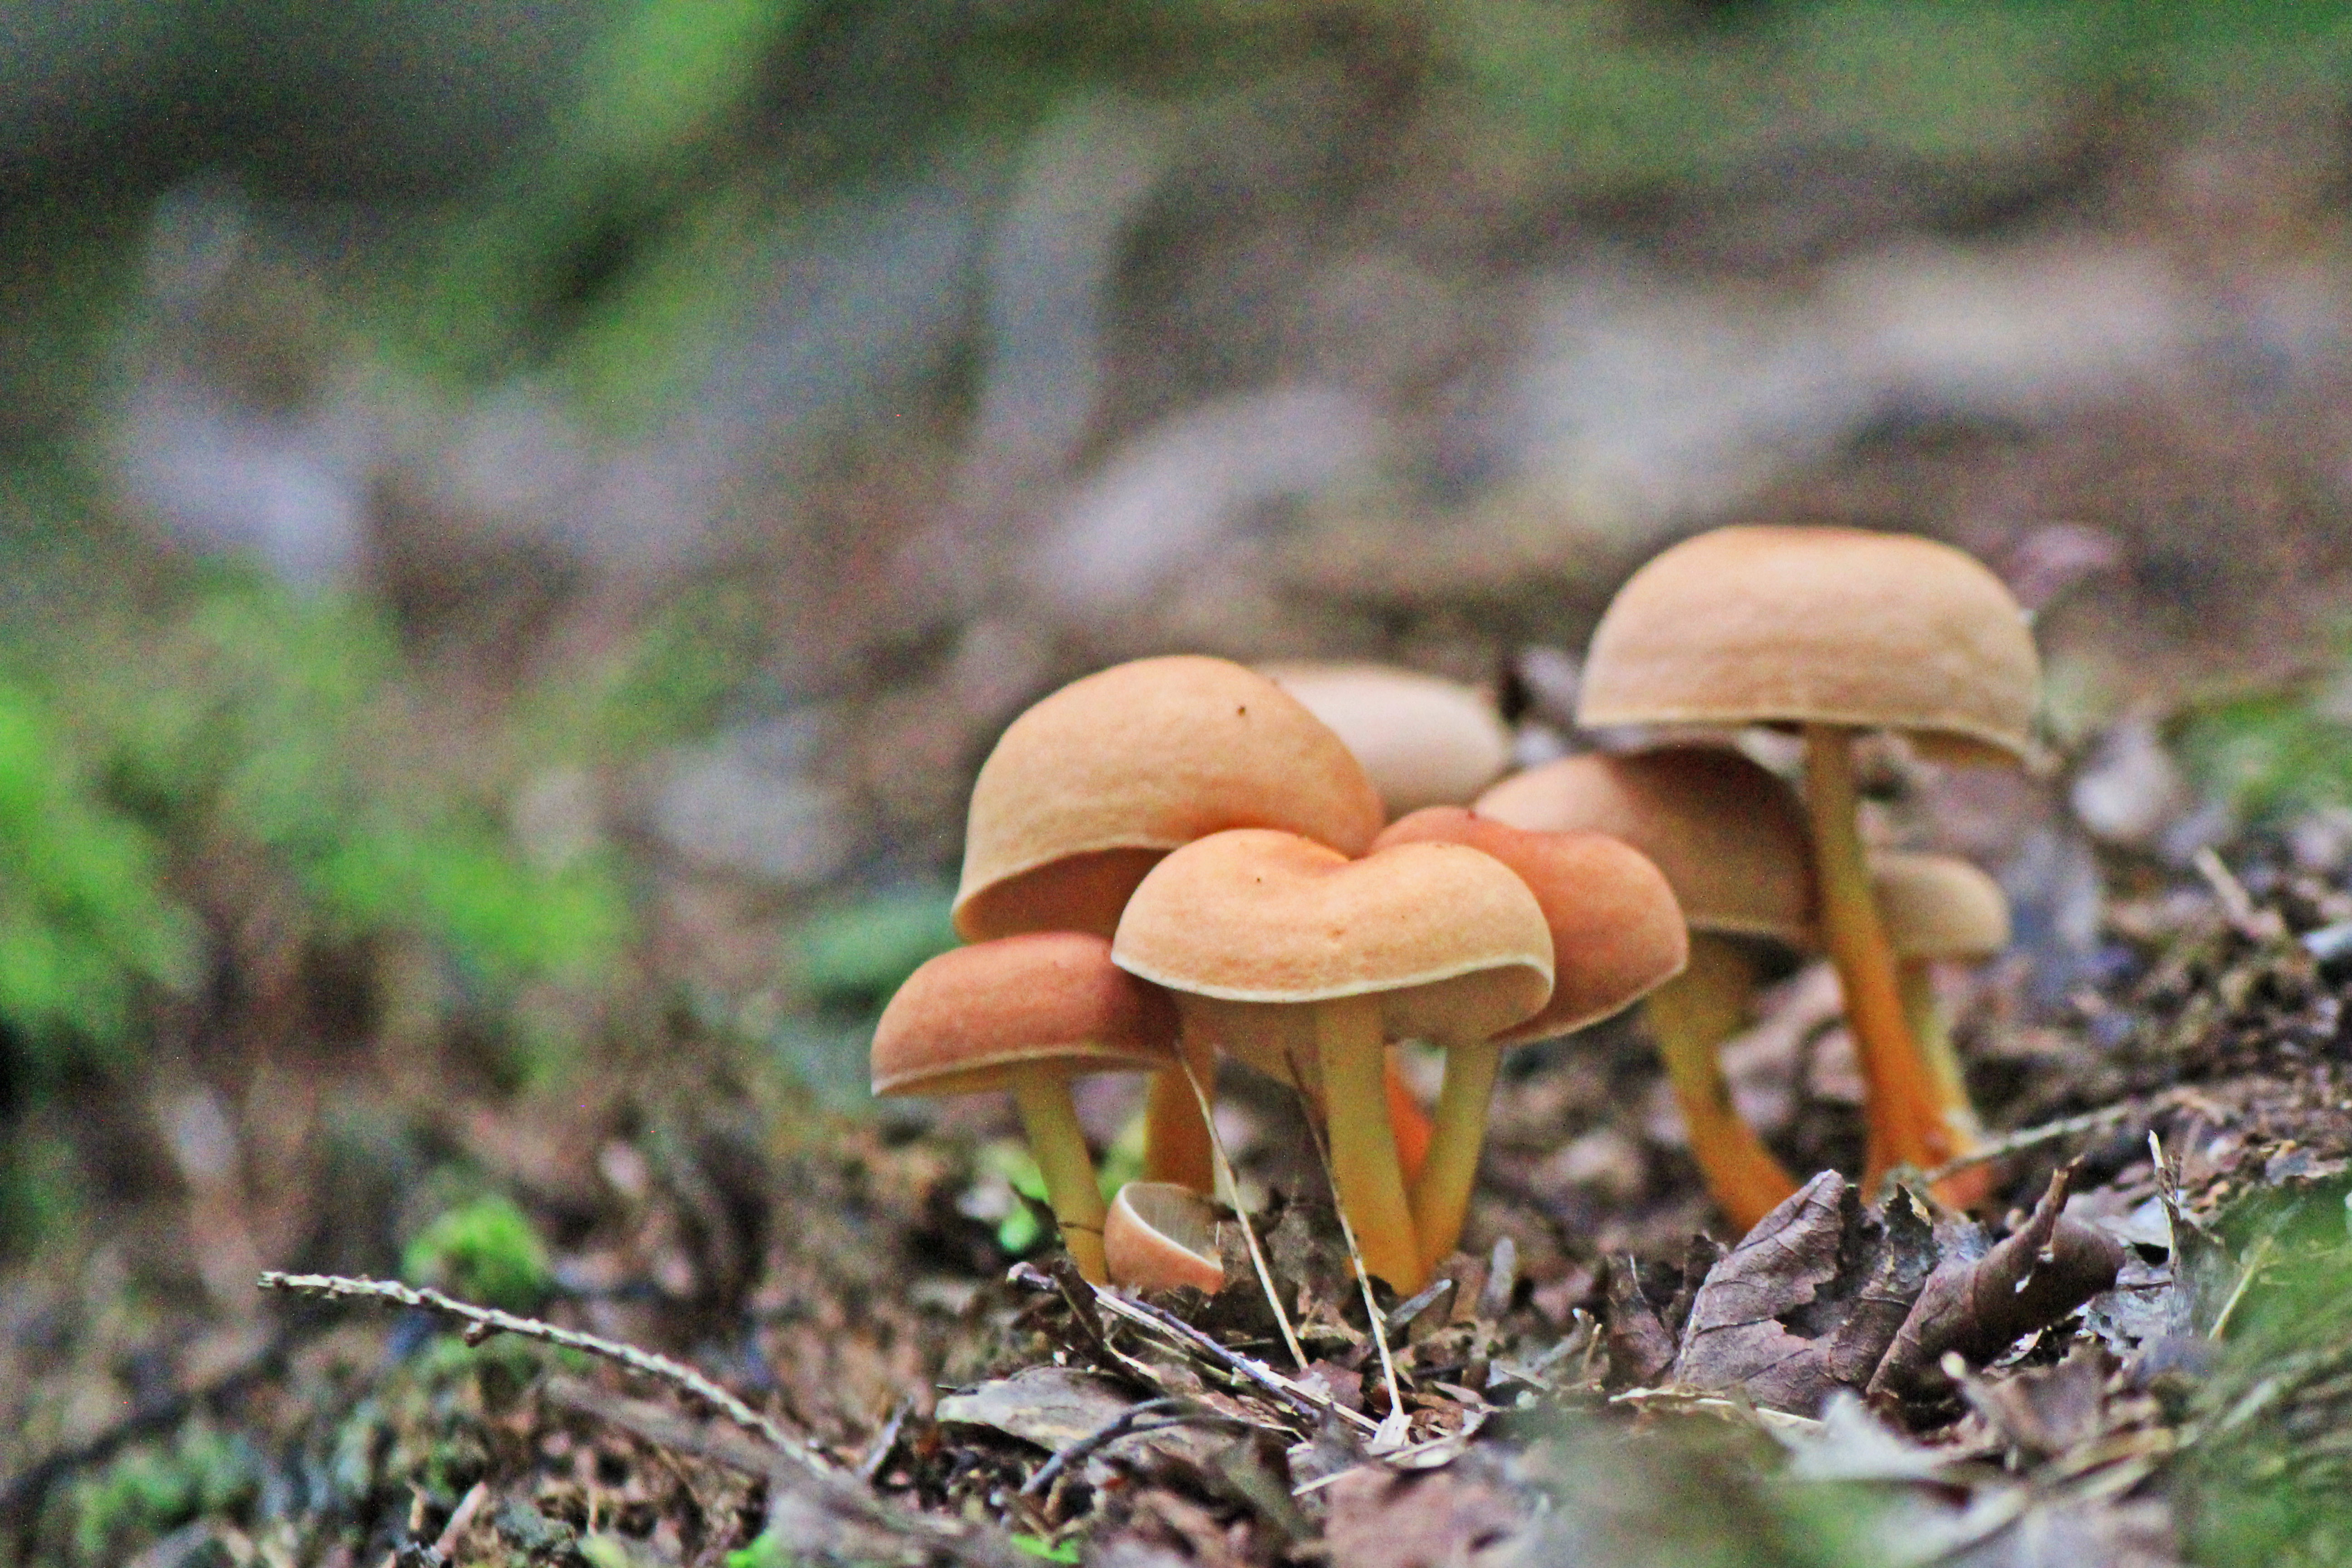 Bruce Trail Wild Mushrooms Image Gallery.